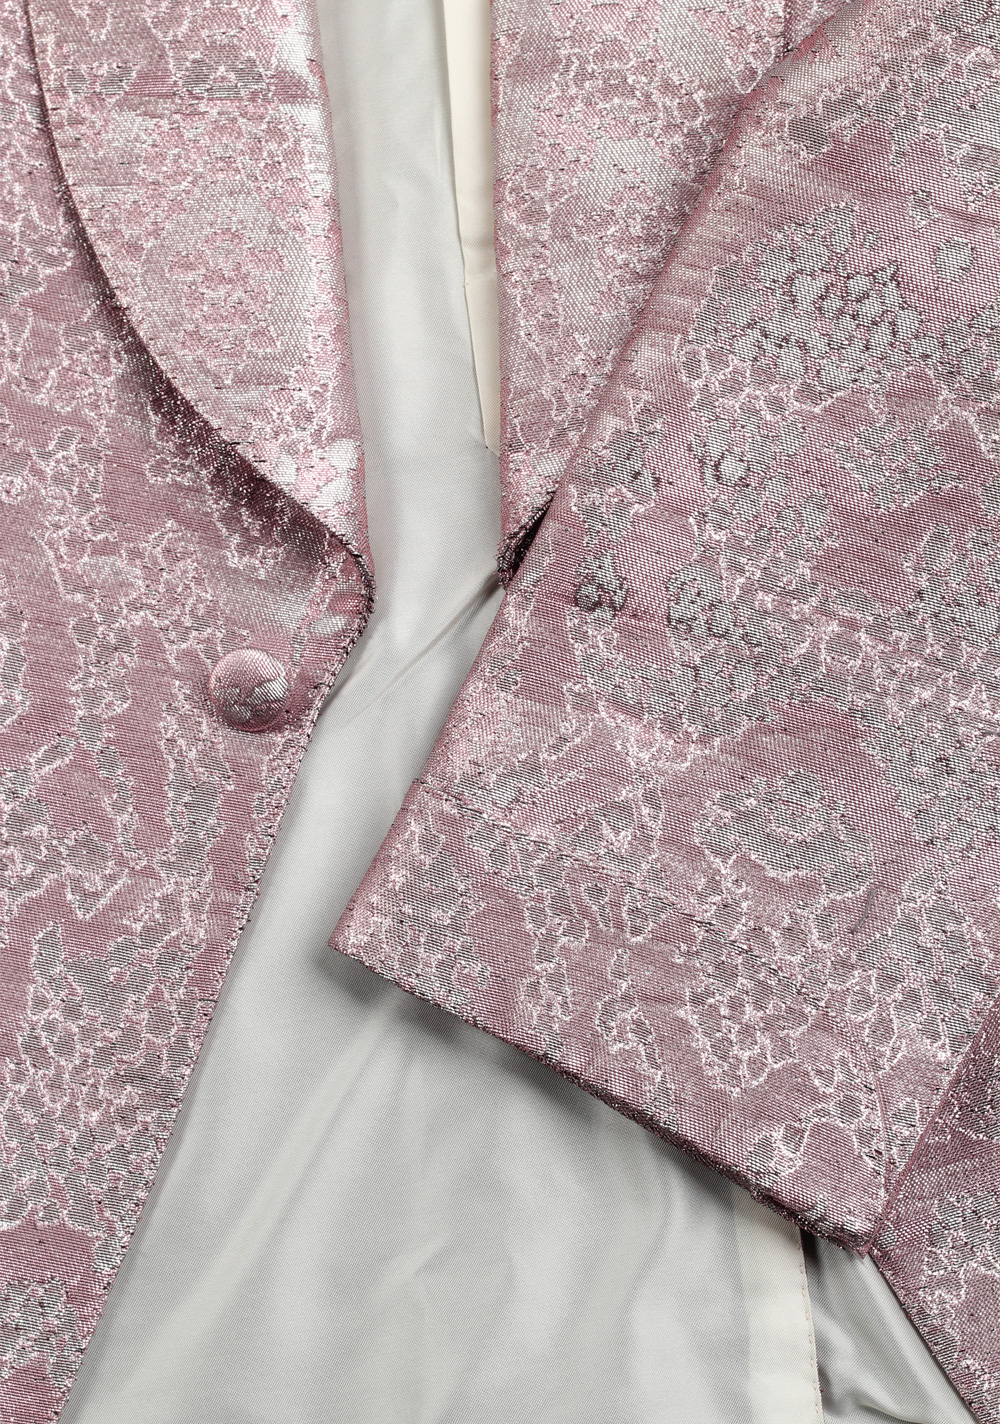 TOM FORD Atticus Pink Tuxedo Dinner Jacket Size 54 / 44R U.S. | Costume Limité